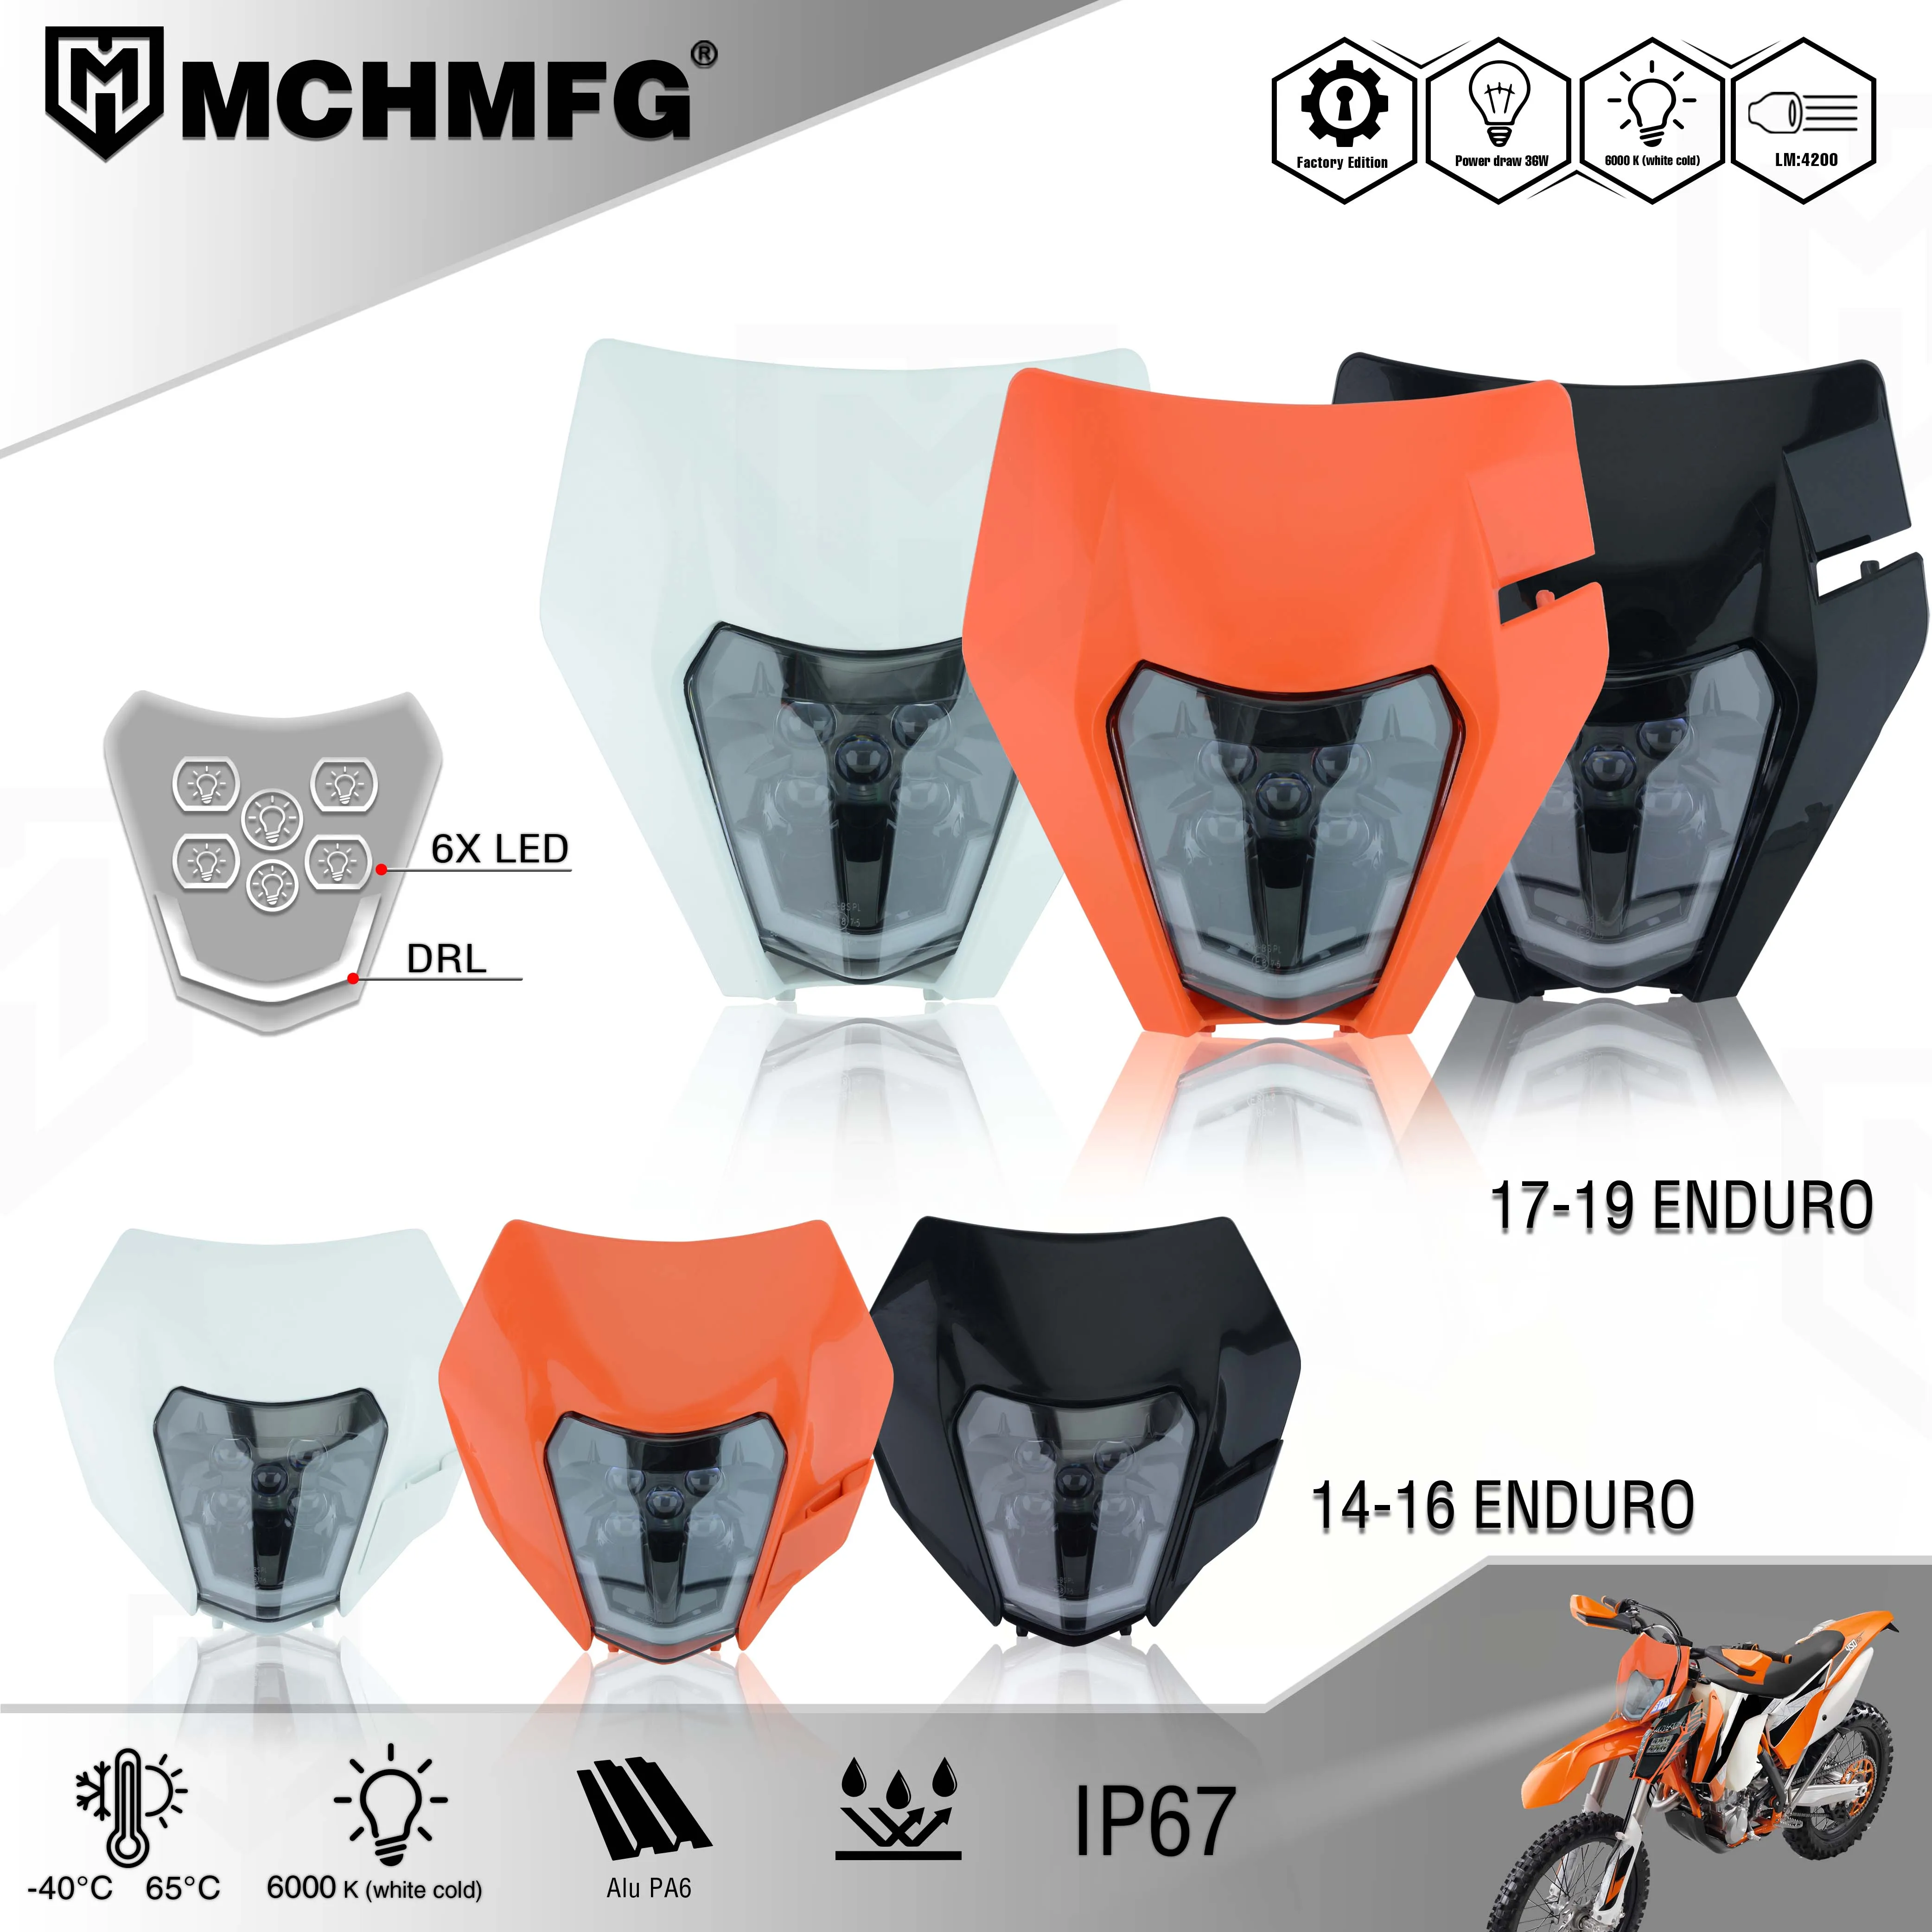 MCHMFG Motorcycle New LED Headlight Headlamp Head Lamp Light For KTM EXC EXCF SX SXF XC XCF XCW XCFW 125 150 250 300 350 450 530